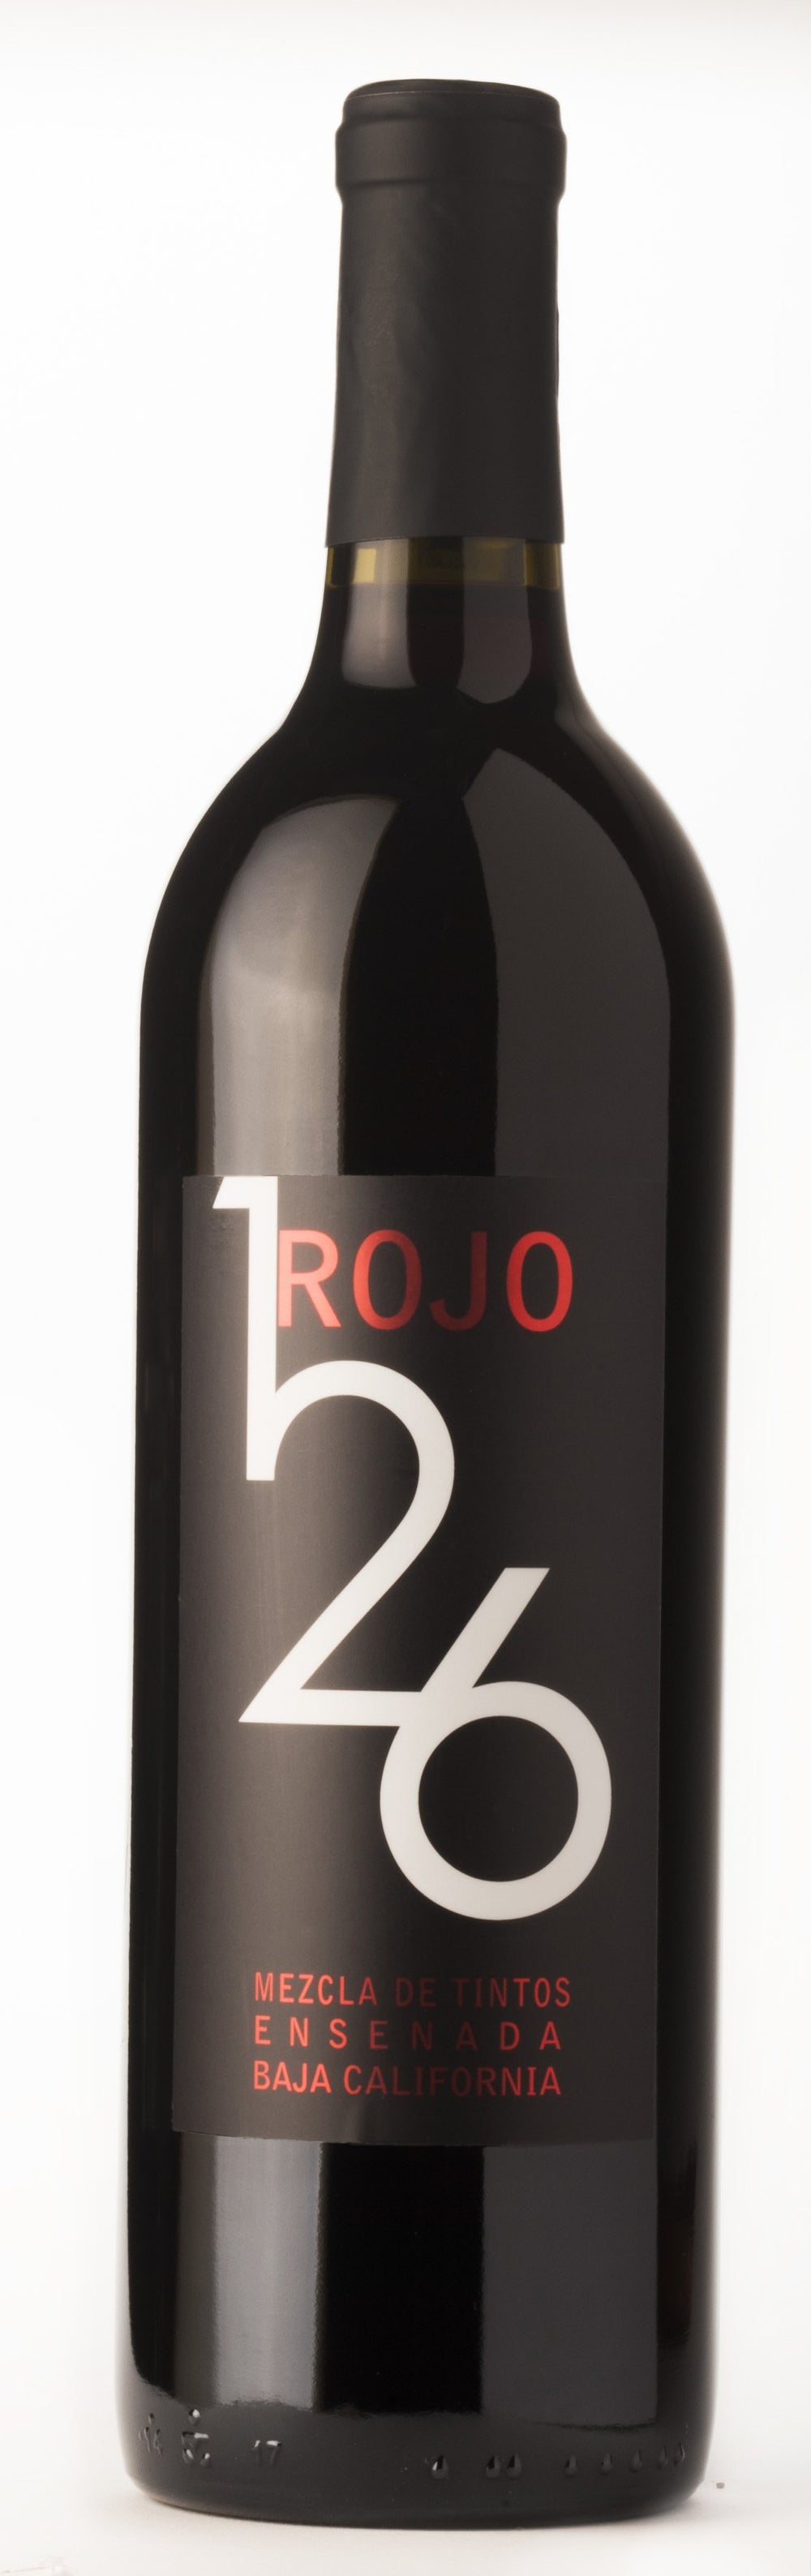 Vino Tinto Cava Aragon 126 Madera 5 Rojo 126 750 ml